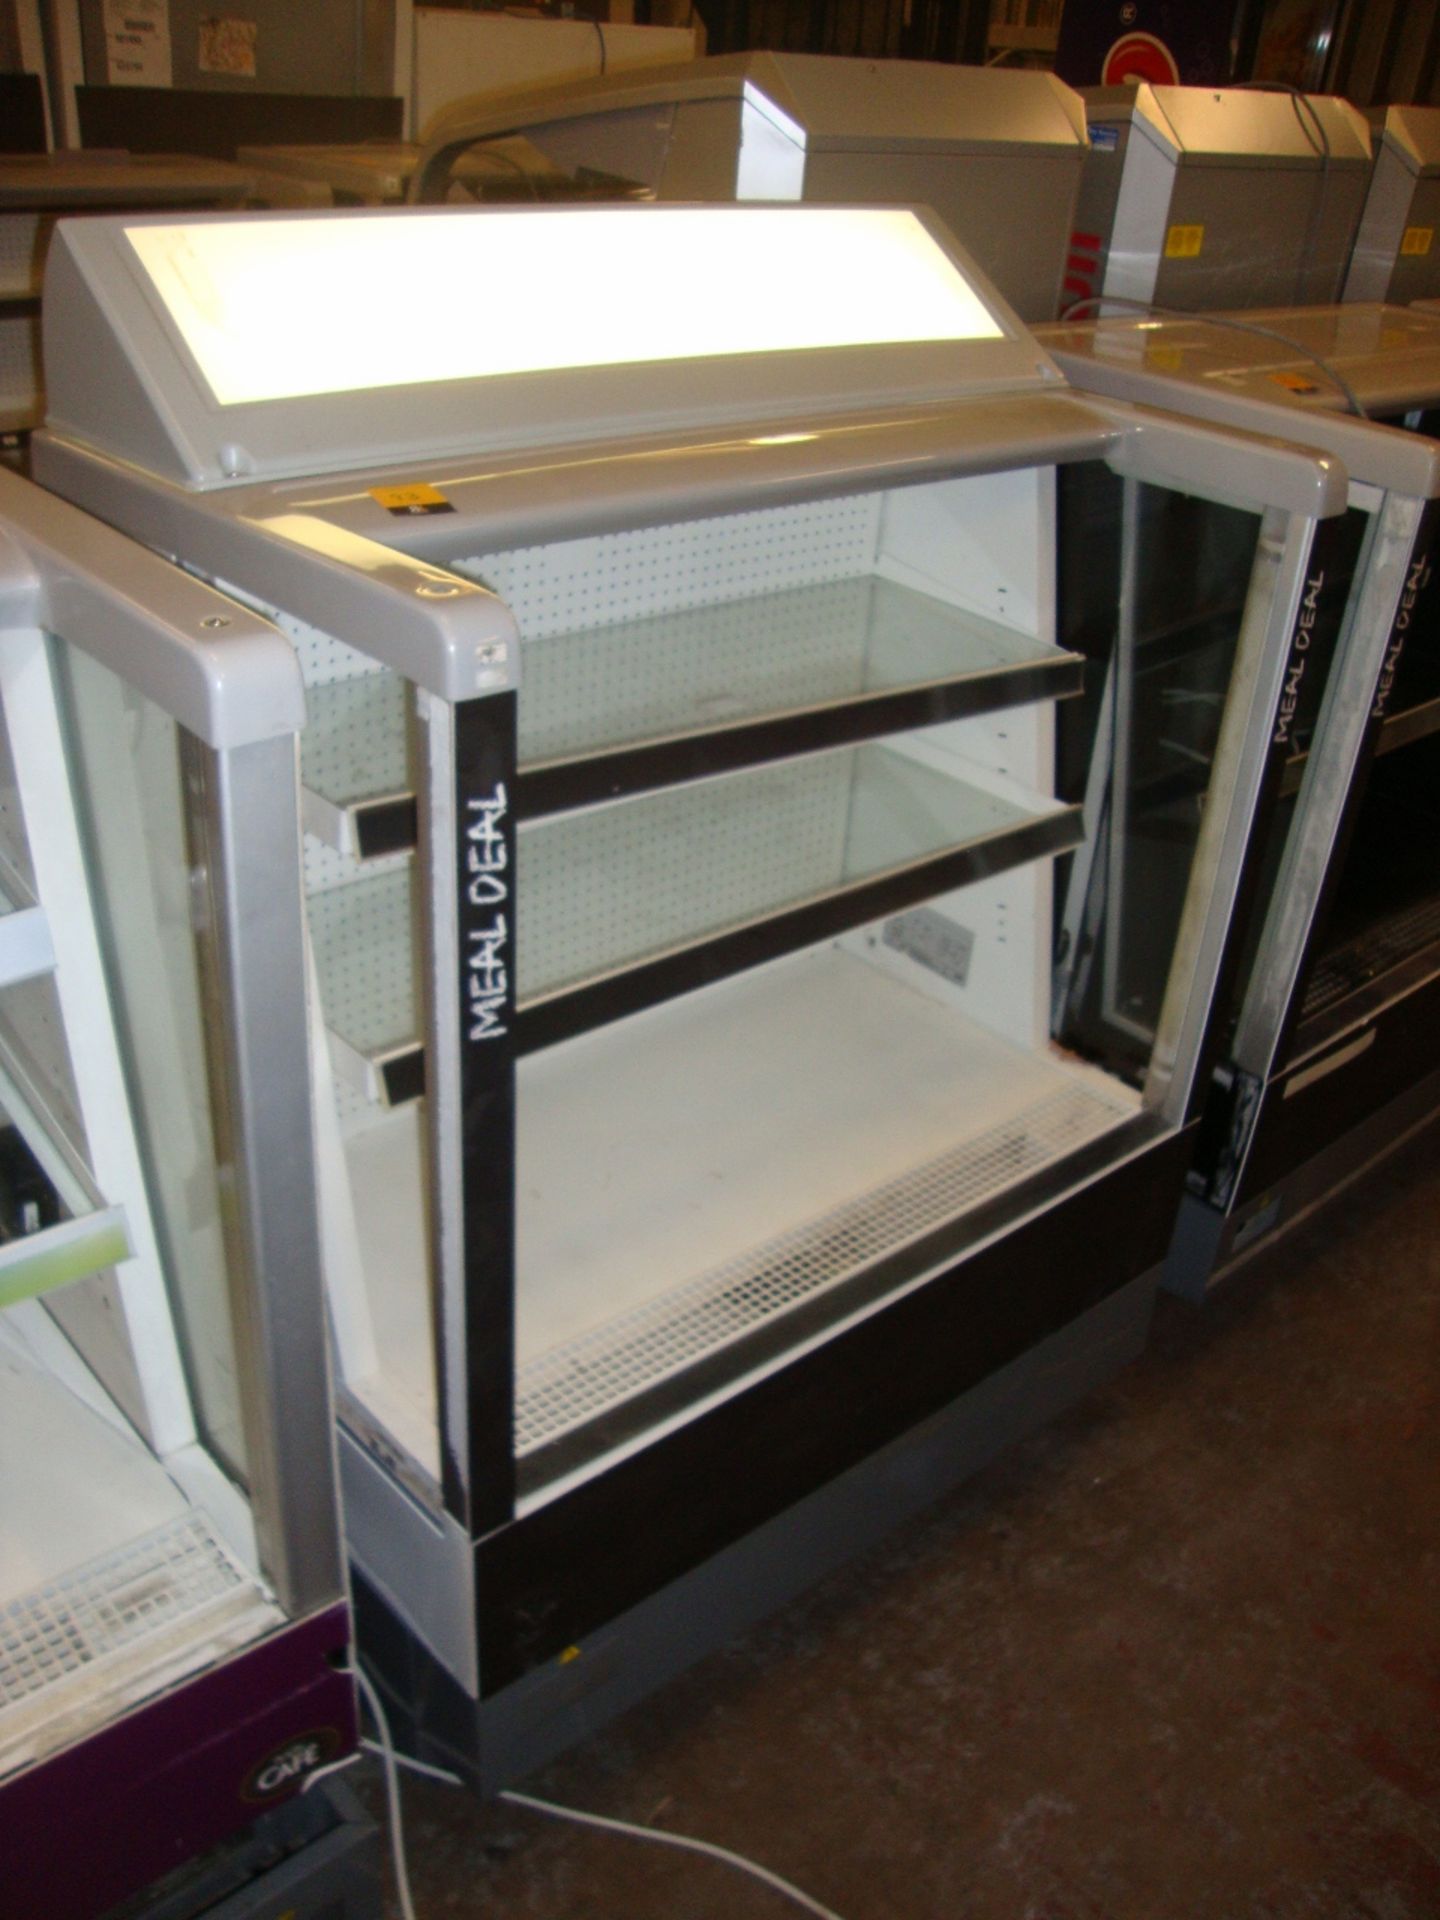 Carrier Presenter 1045 open front display chiller/fridge